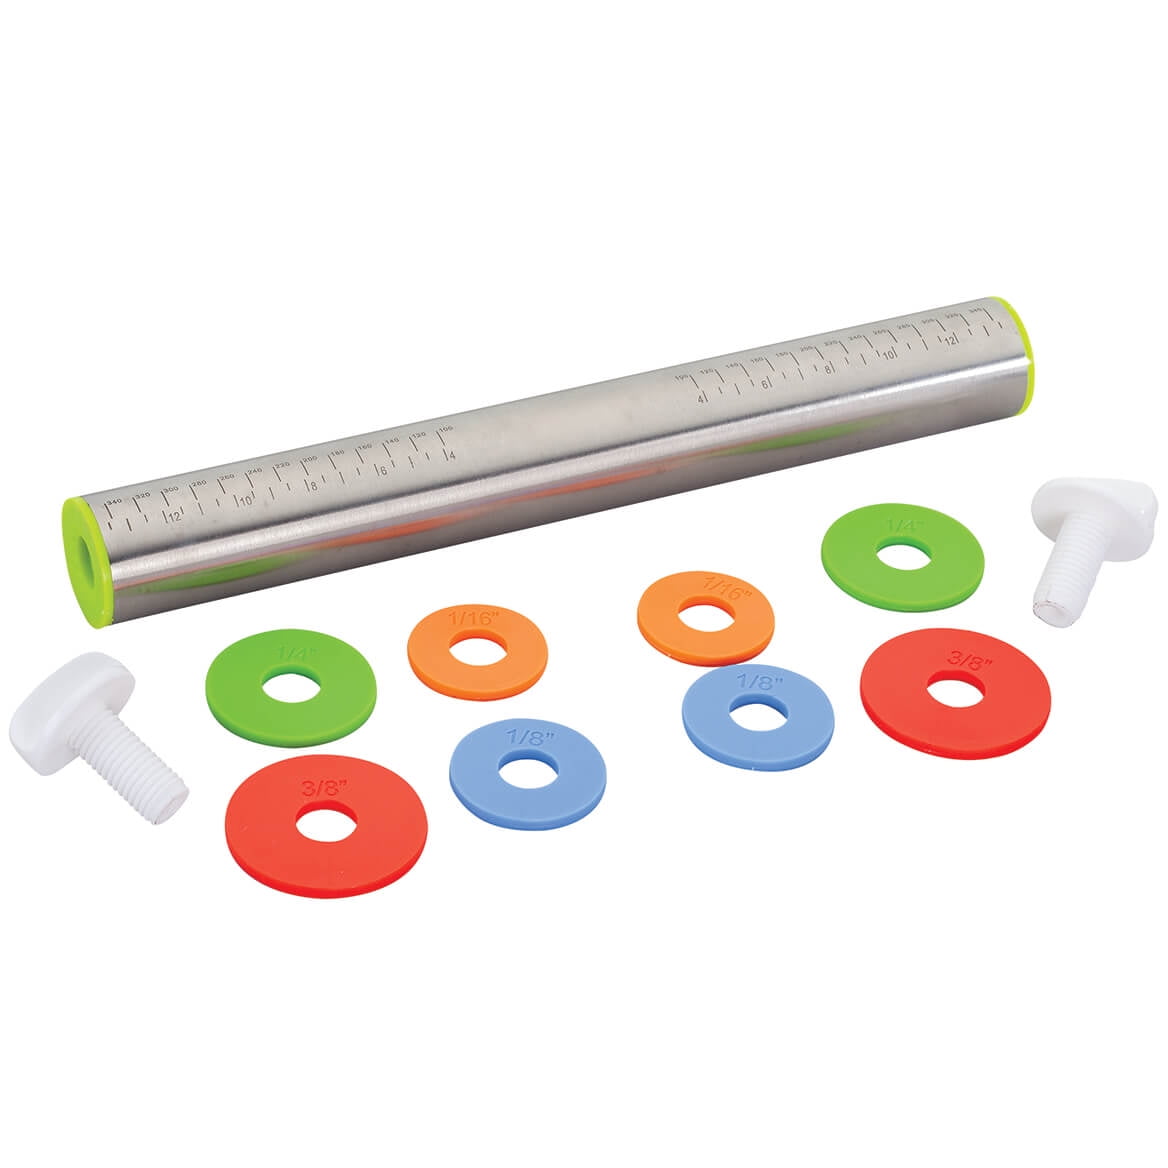 Joseph Joseph Adjustable Rolling Pin With Measuring Rings Gray